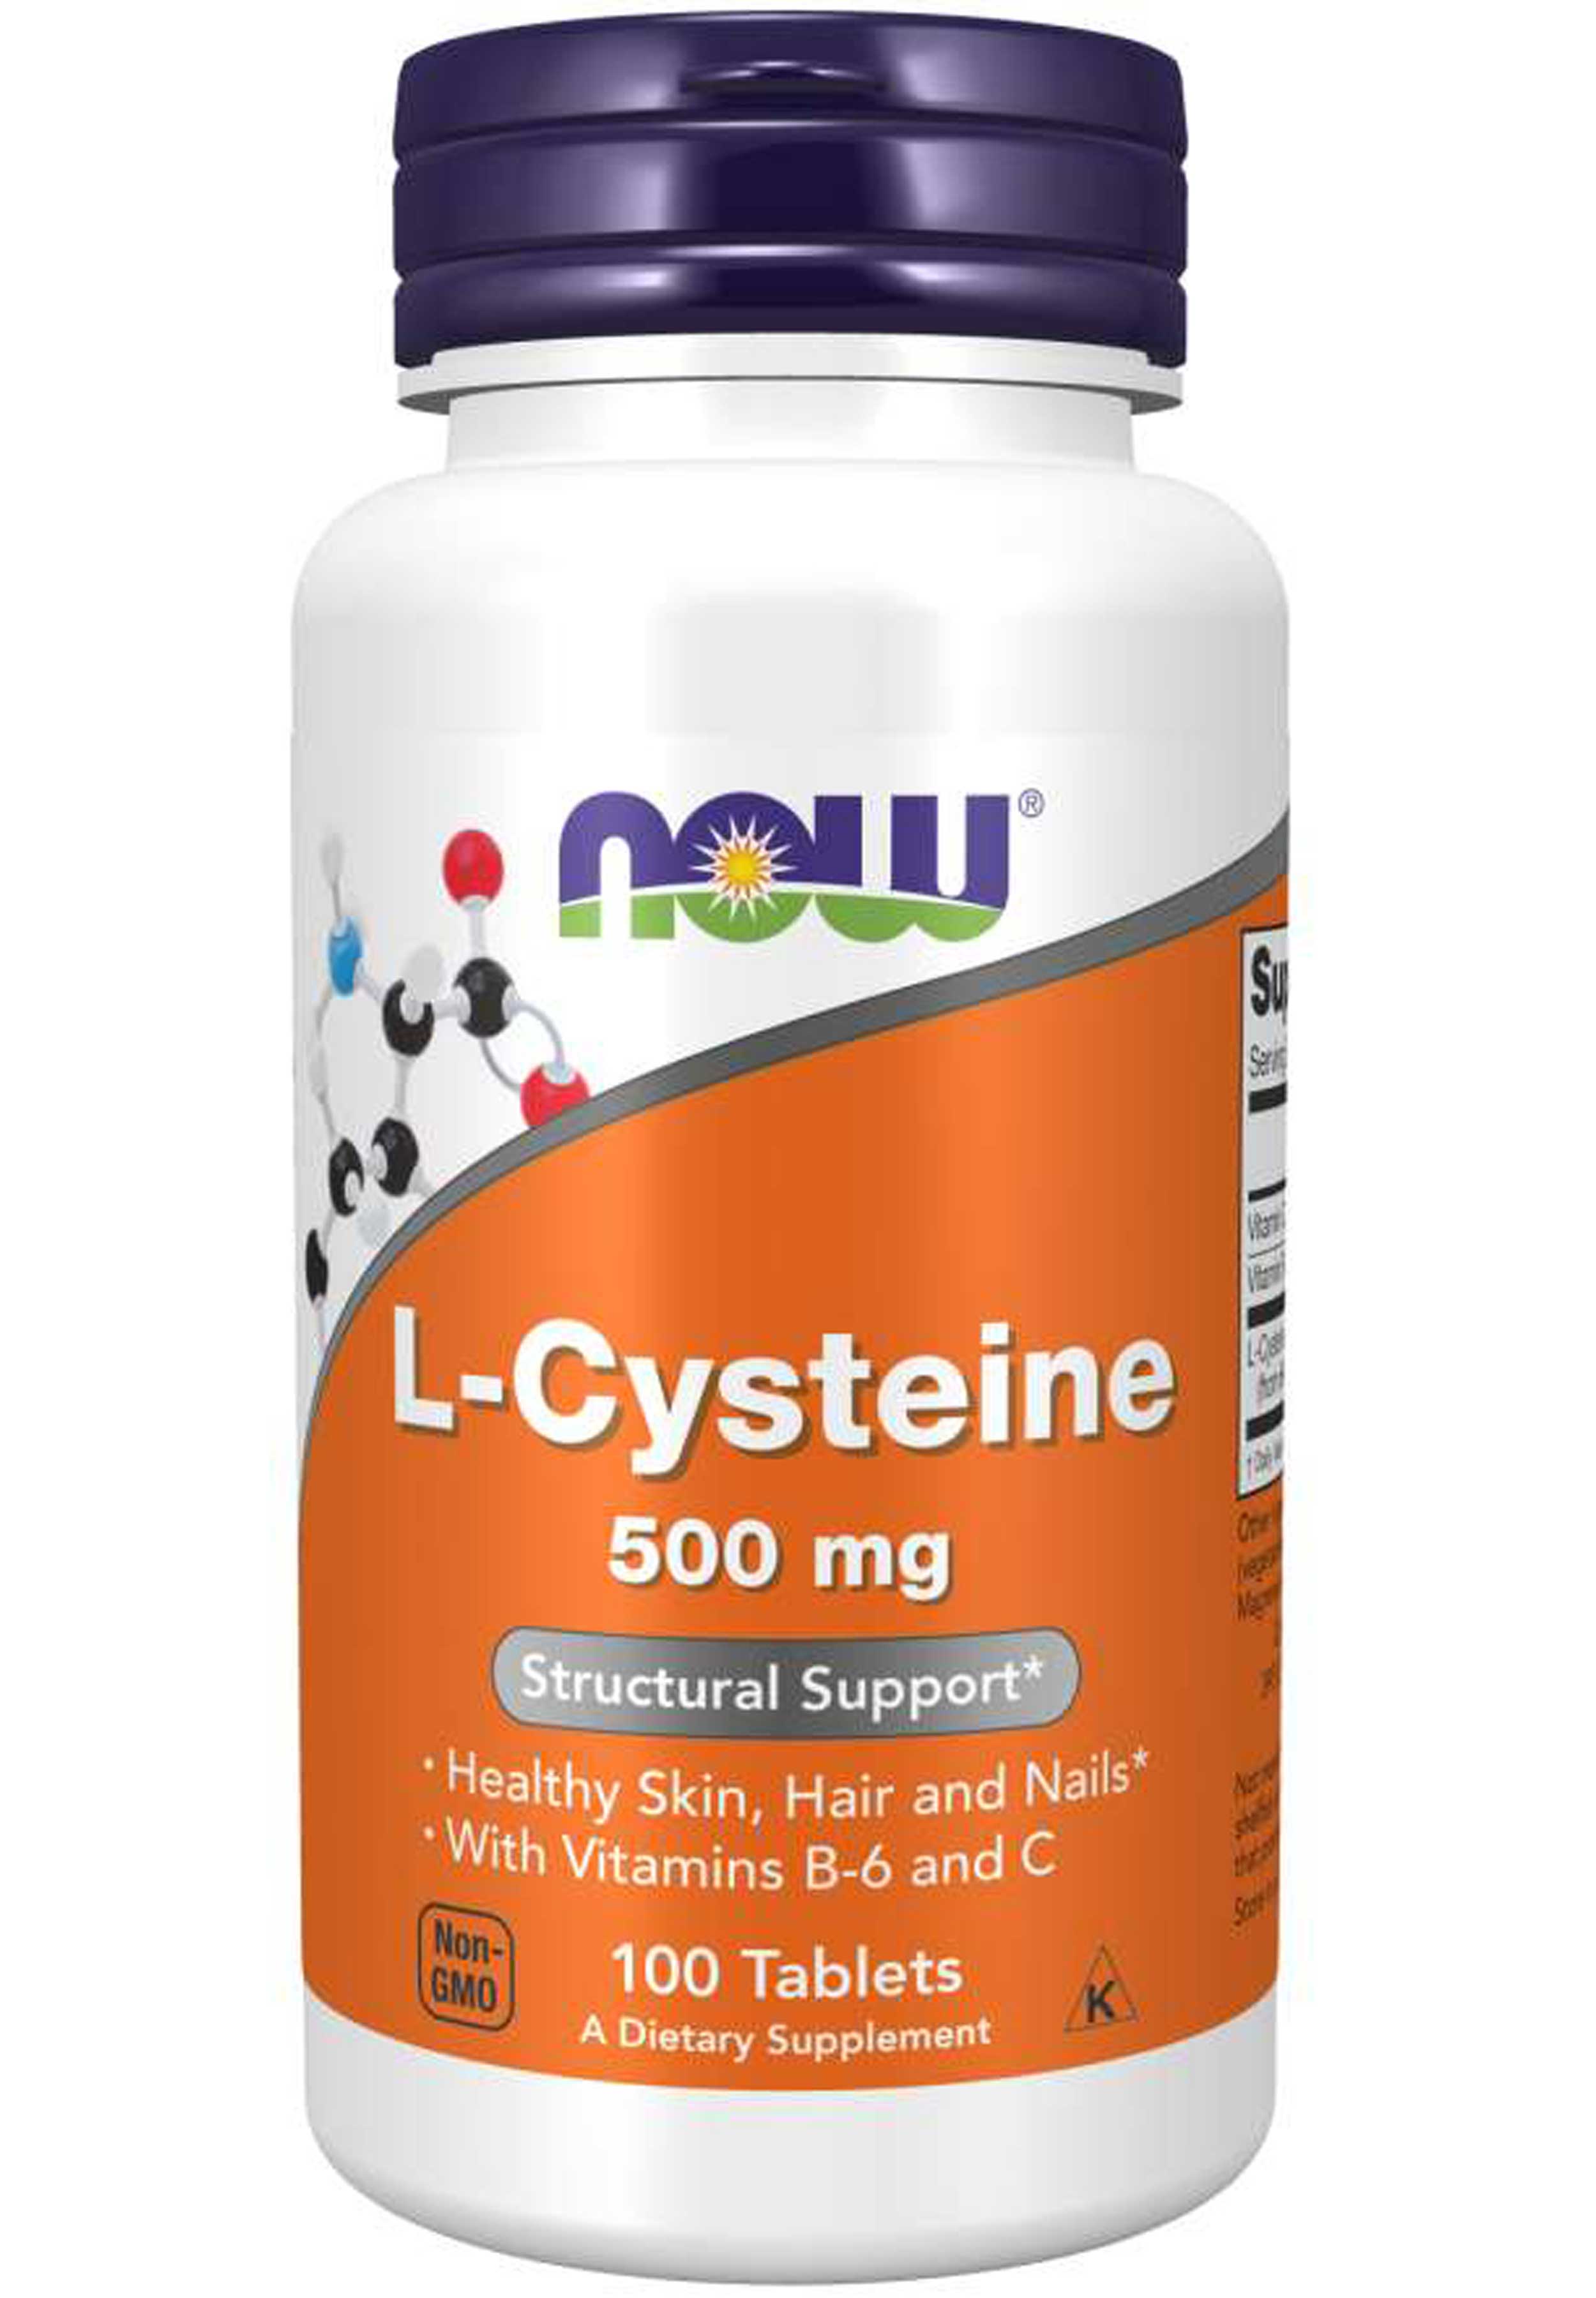 NOW L-Cysteine 500 mg